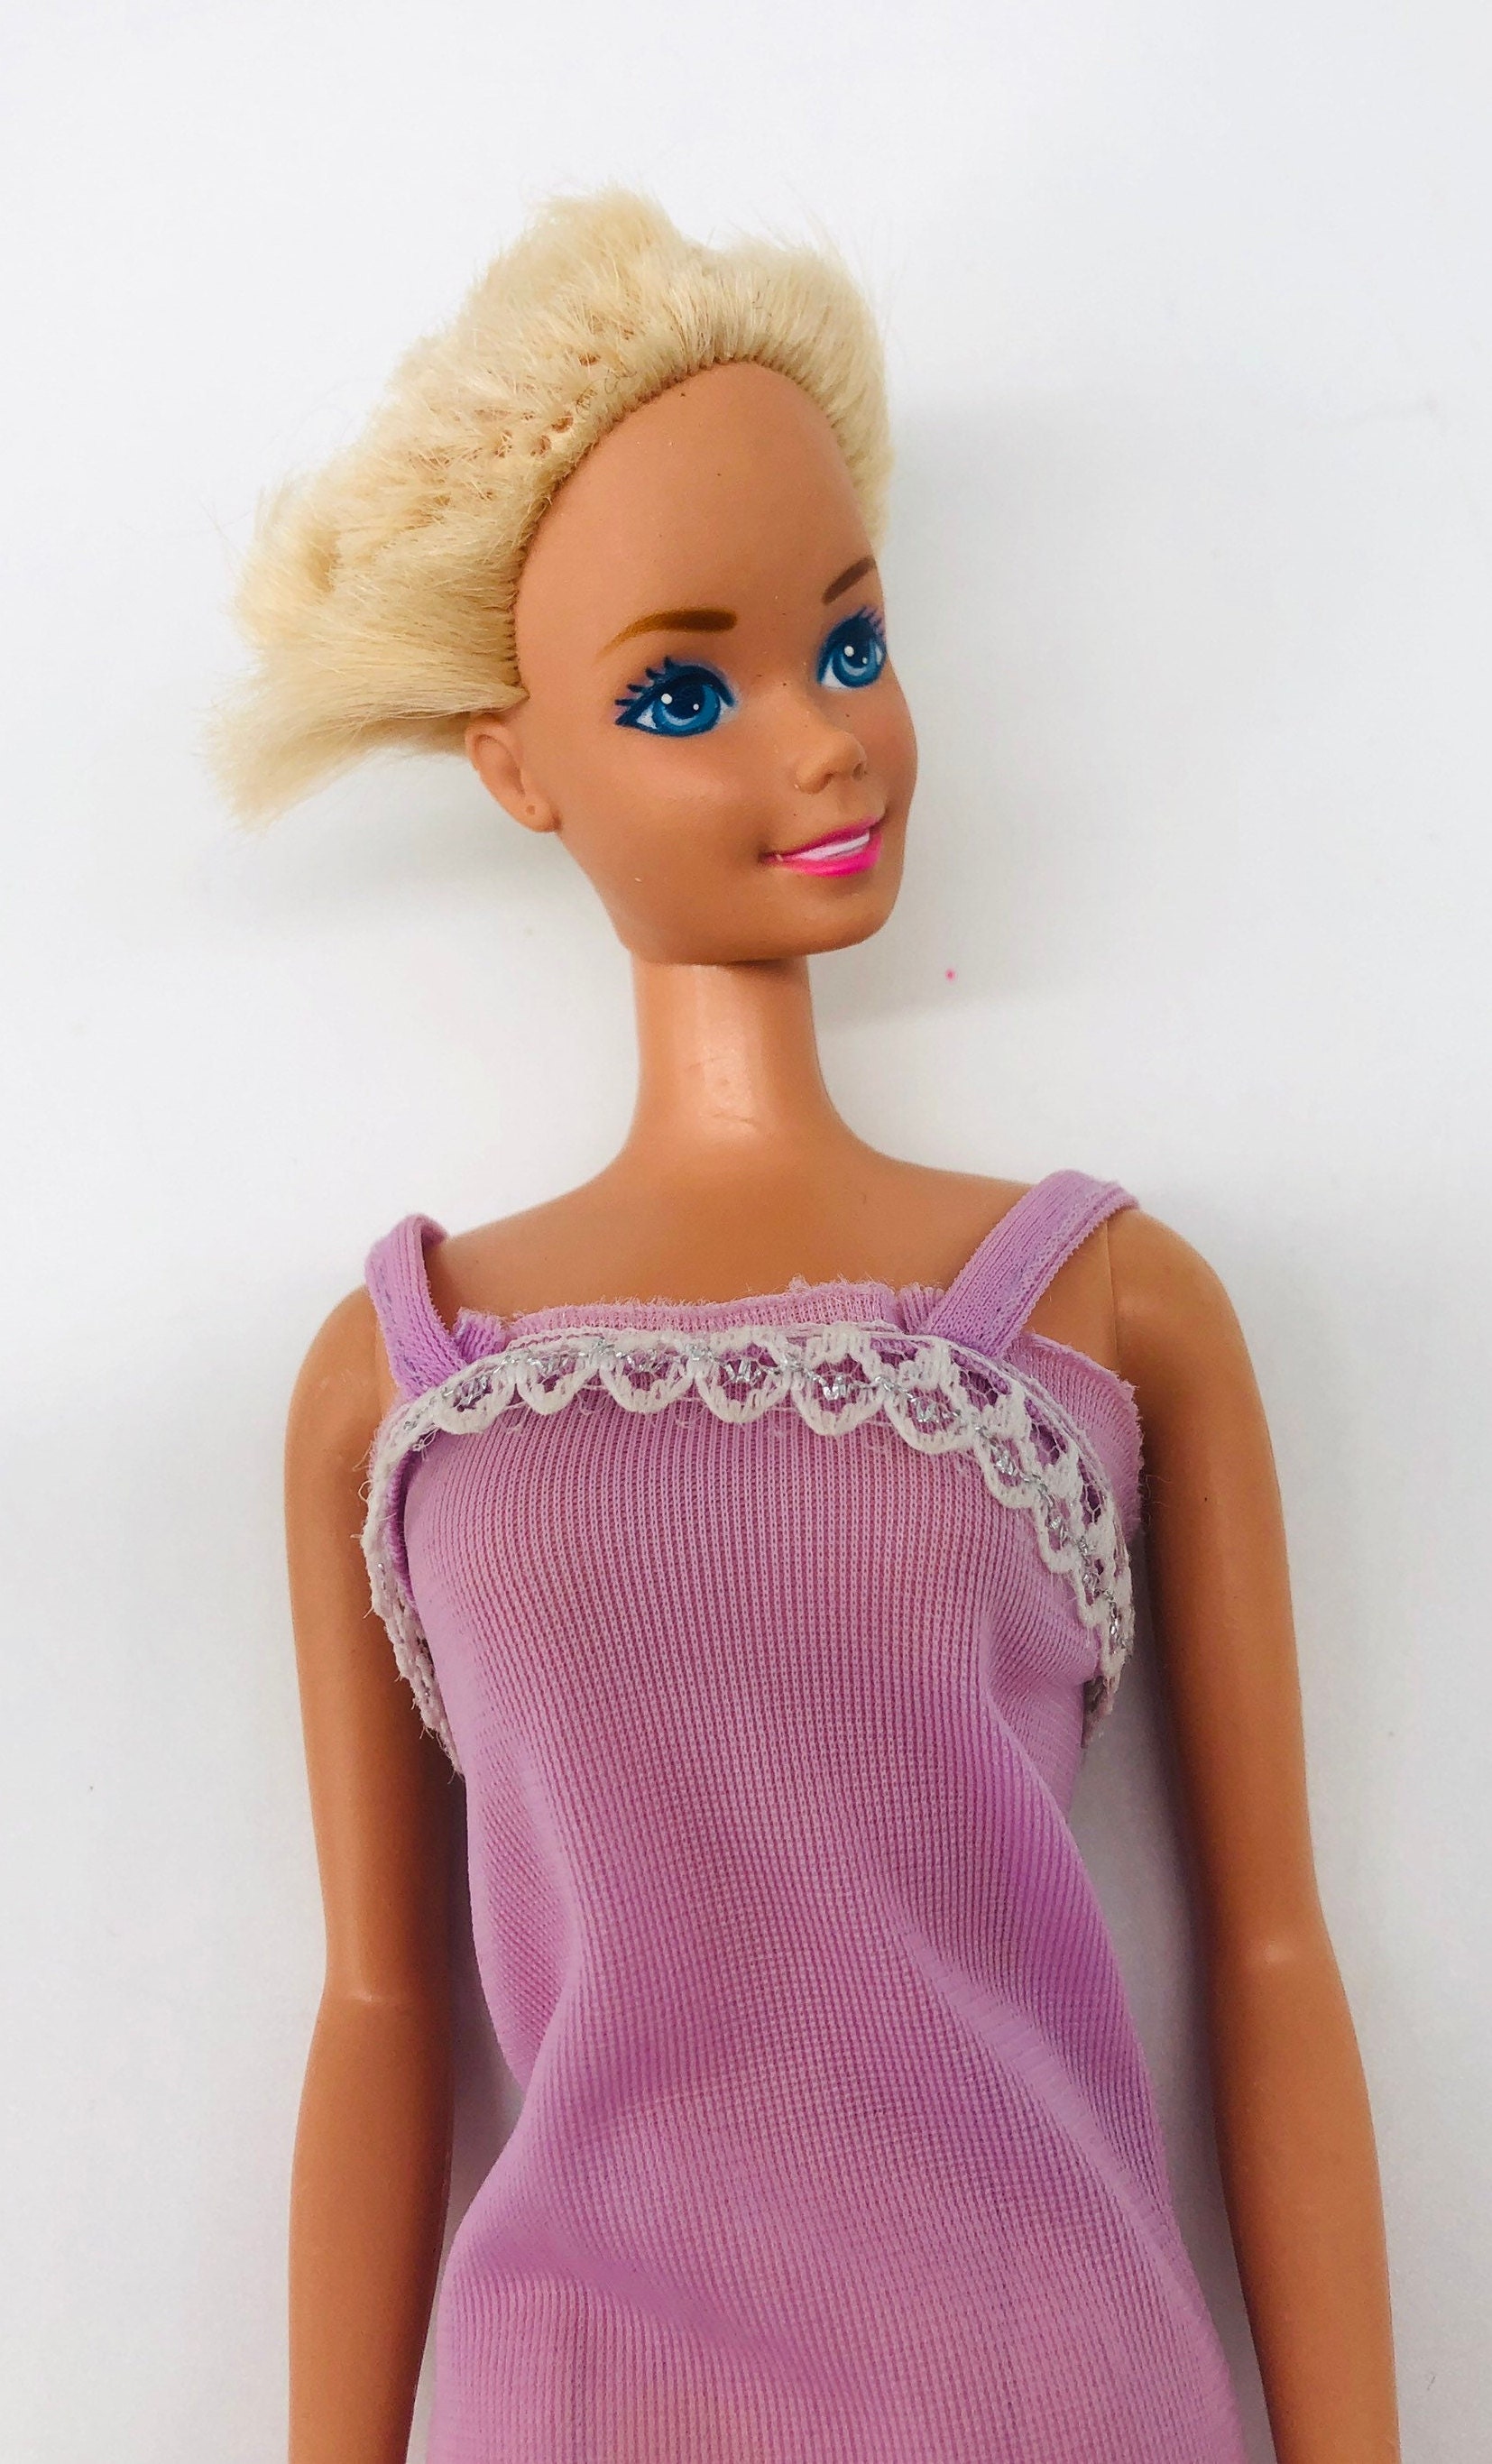 Barbie It's a Girl Barbie Collector X8428 NIB